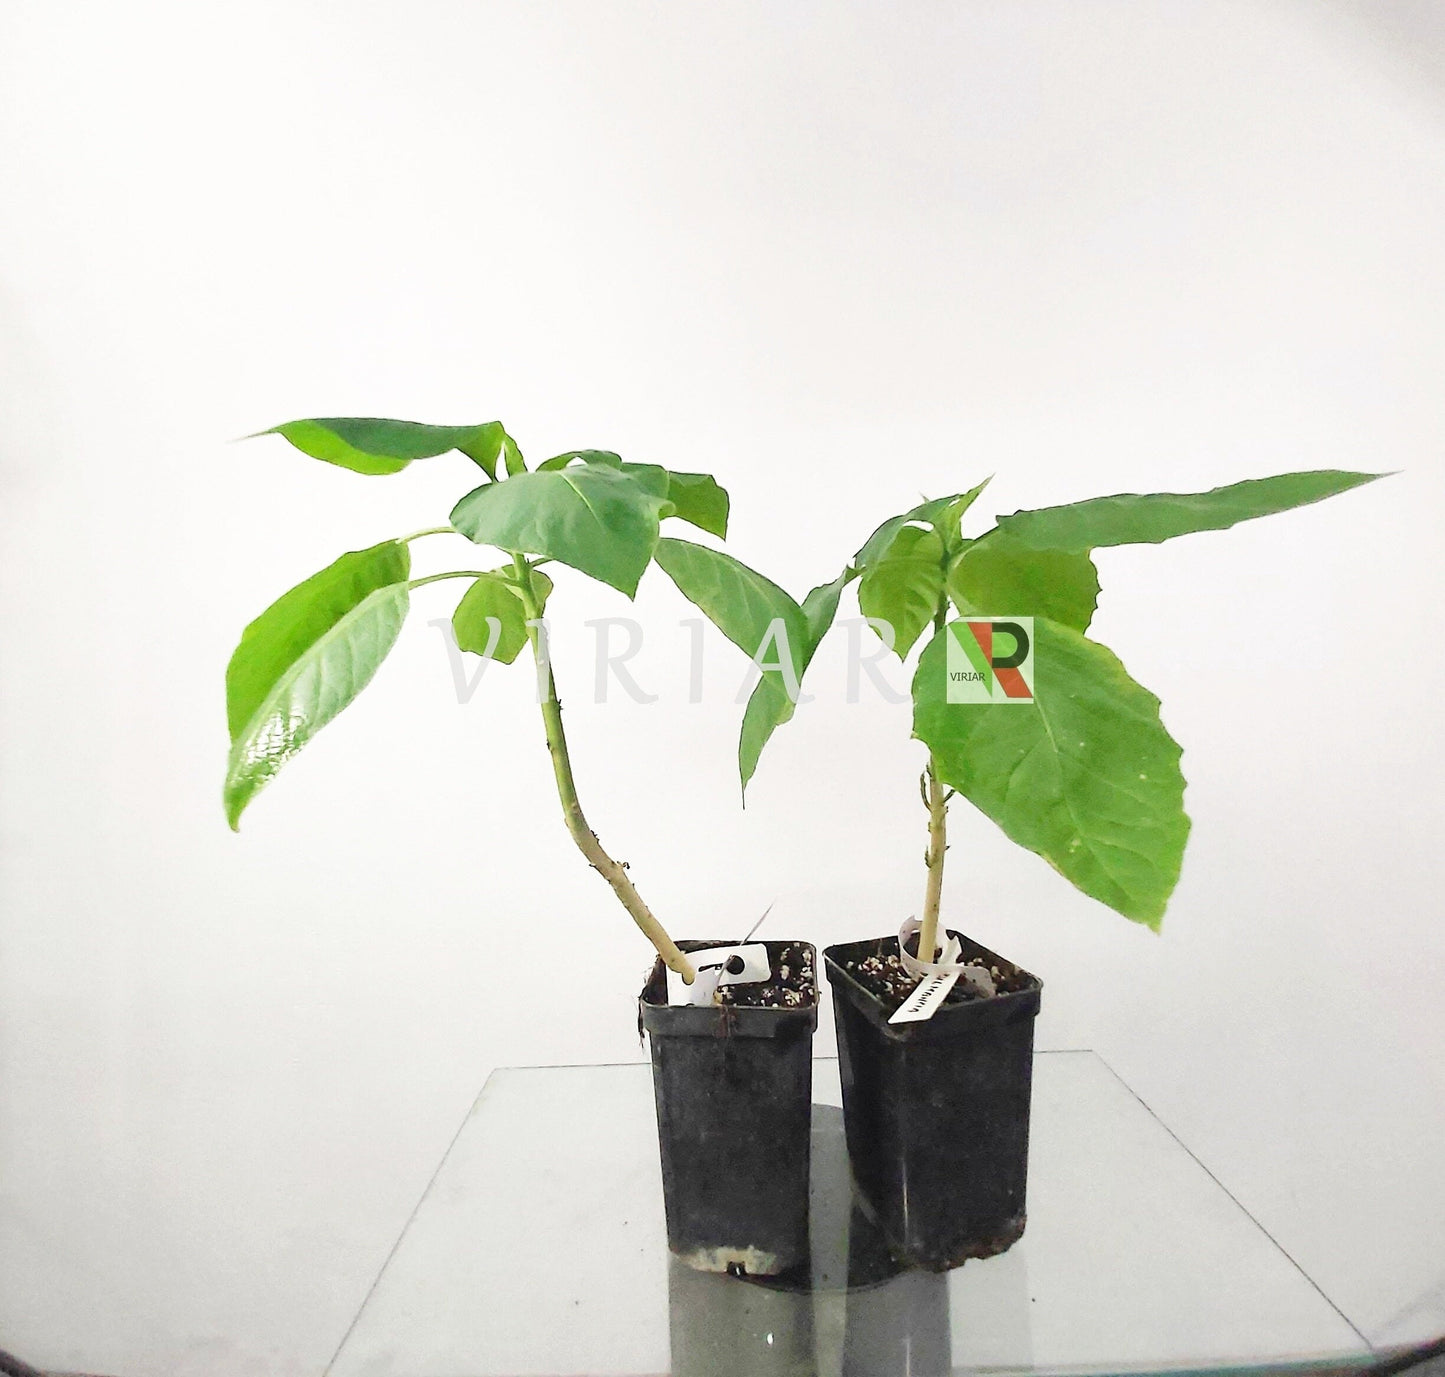 Brugmansia versicolor - Angel's Trumpet - Plant 20-25 cm tall